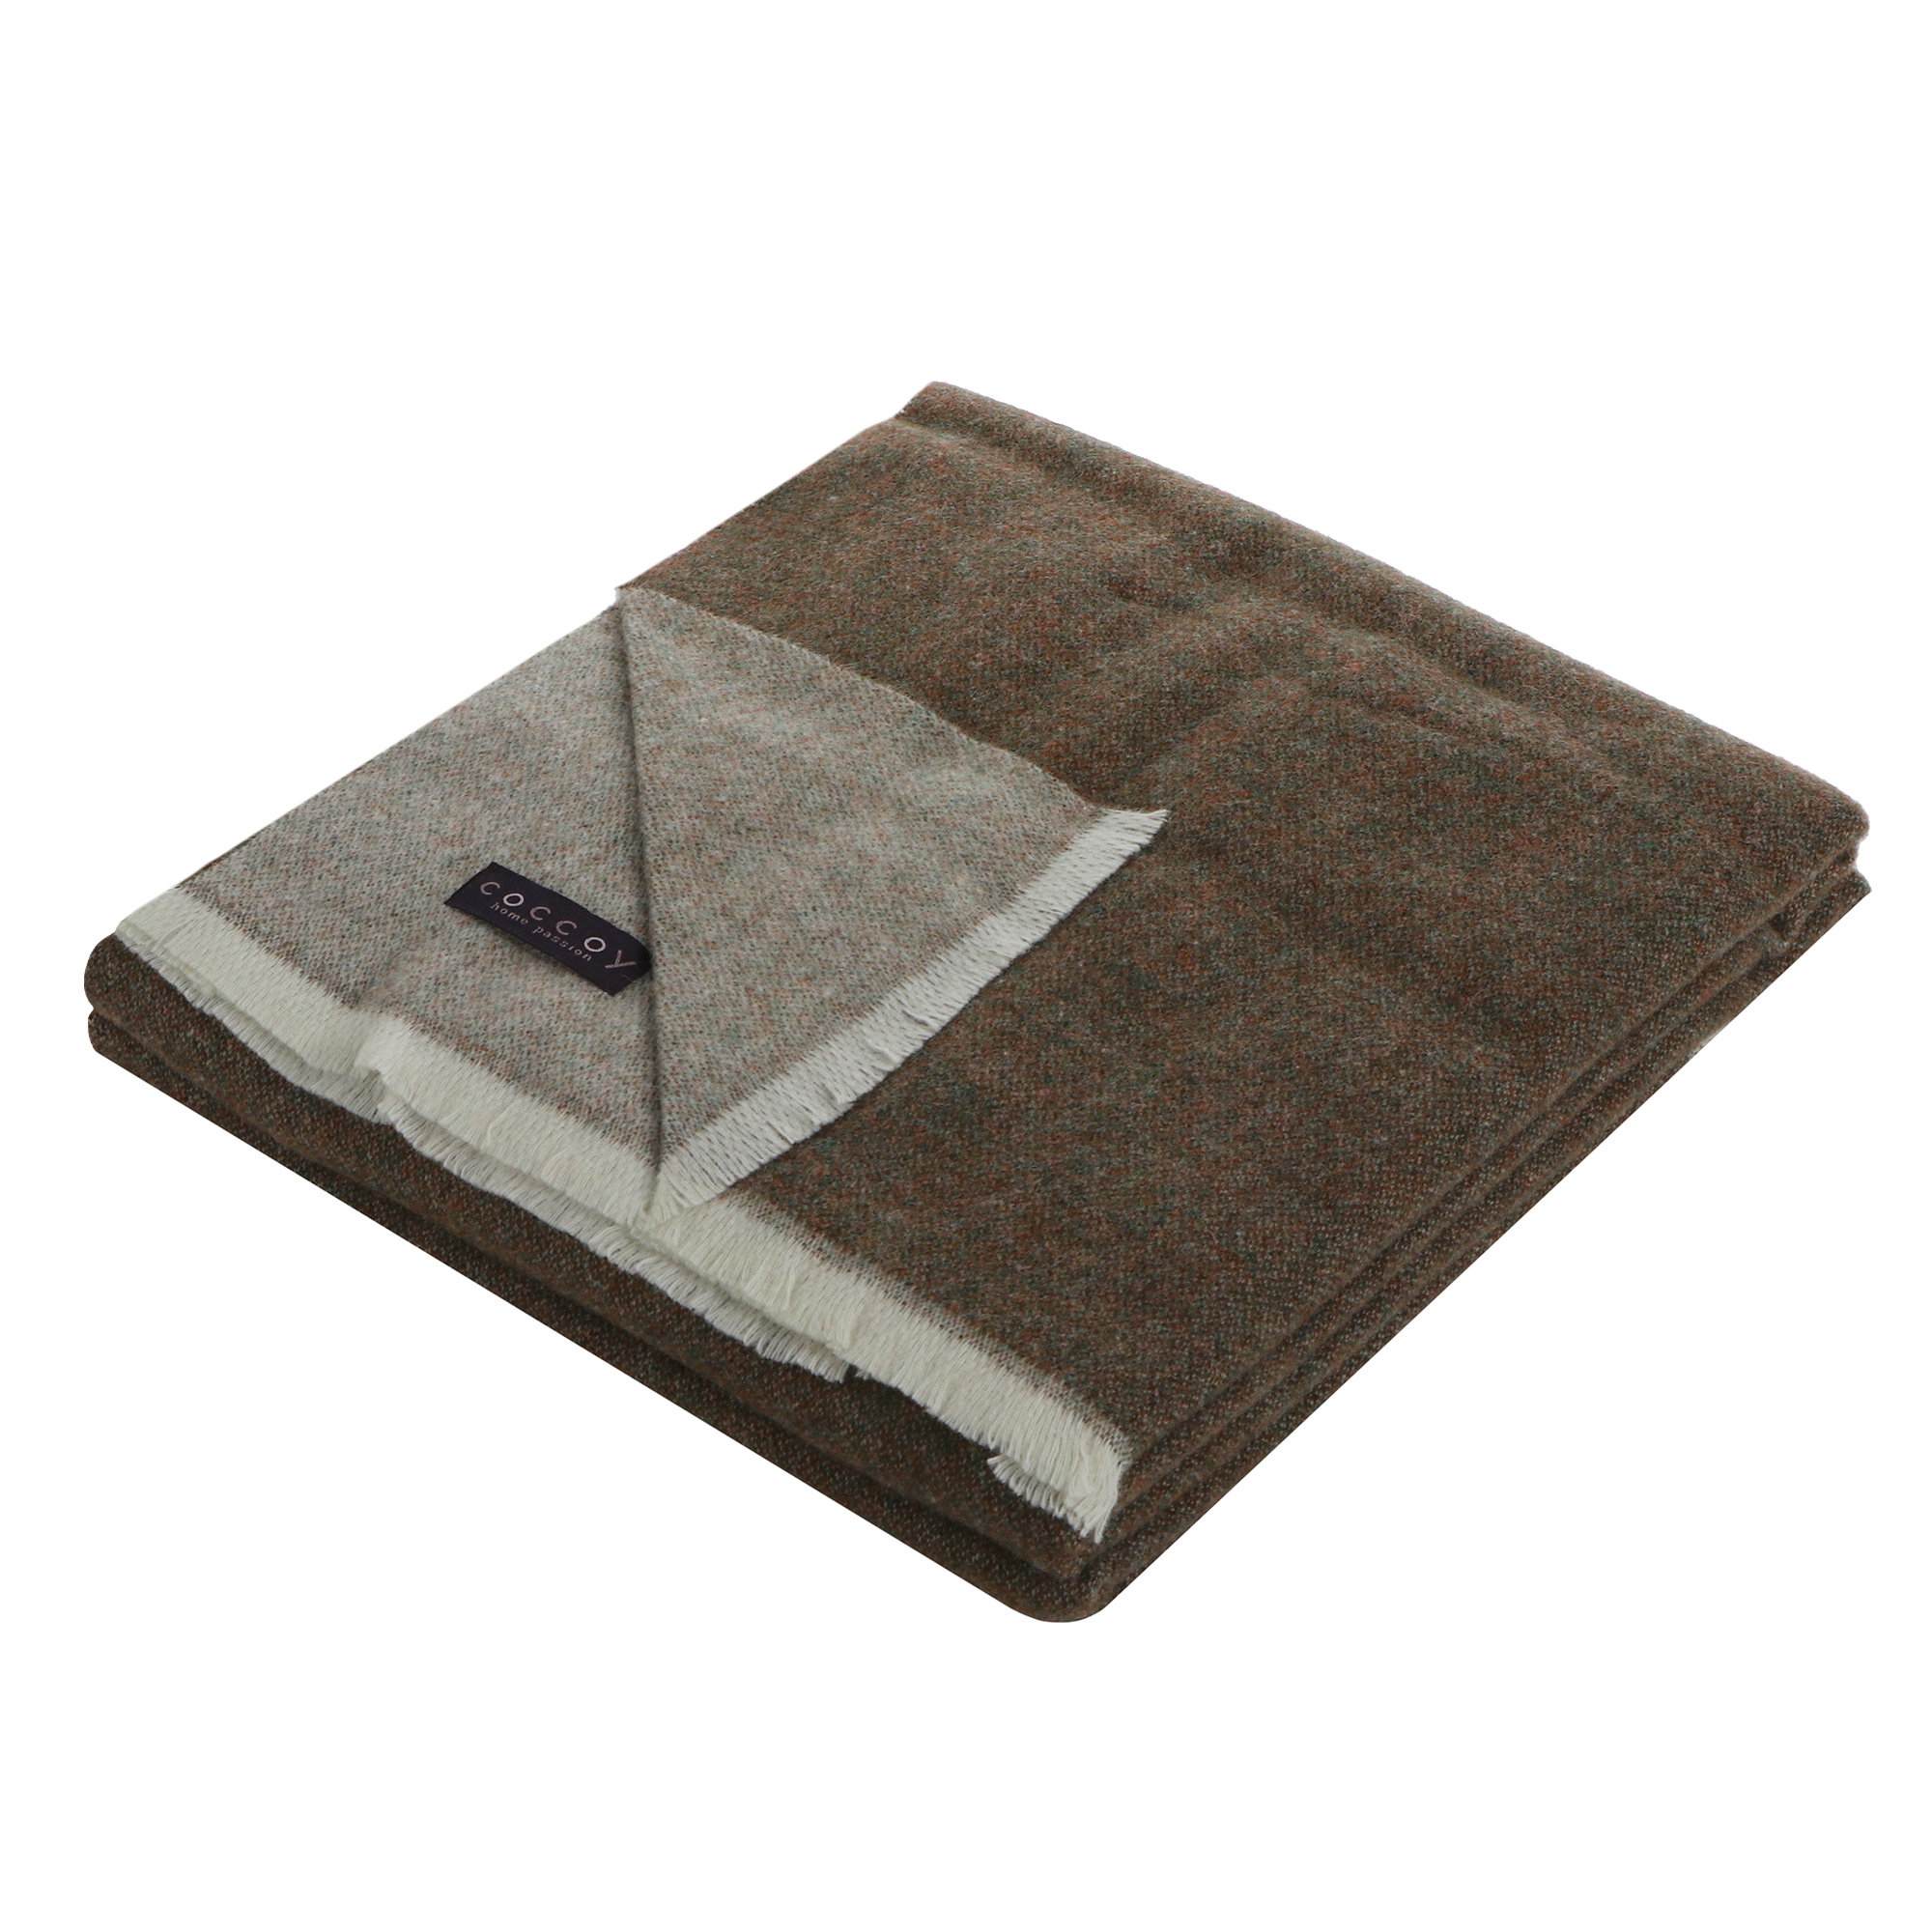 Плед Areain / fashion bed woolly 130x180 коричневый - фото 1